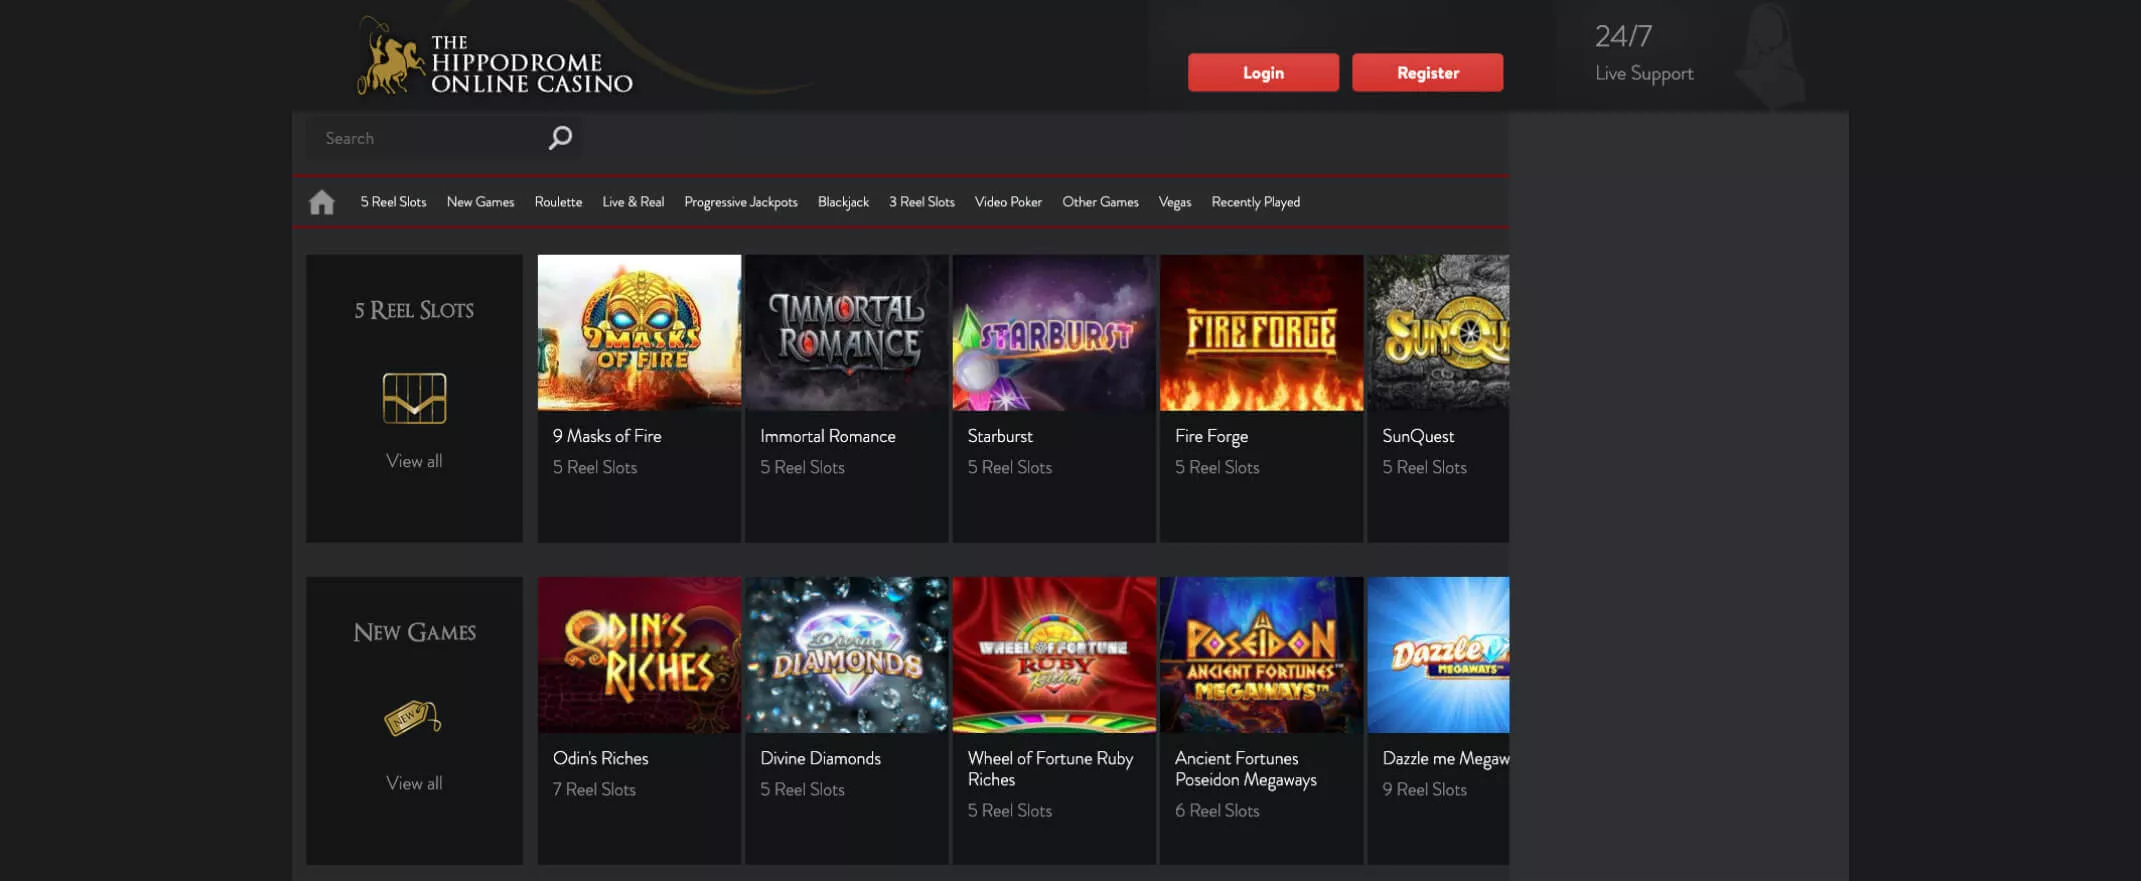 Hippodrome online casino screenshot of the games